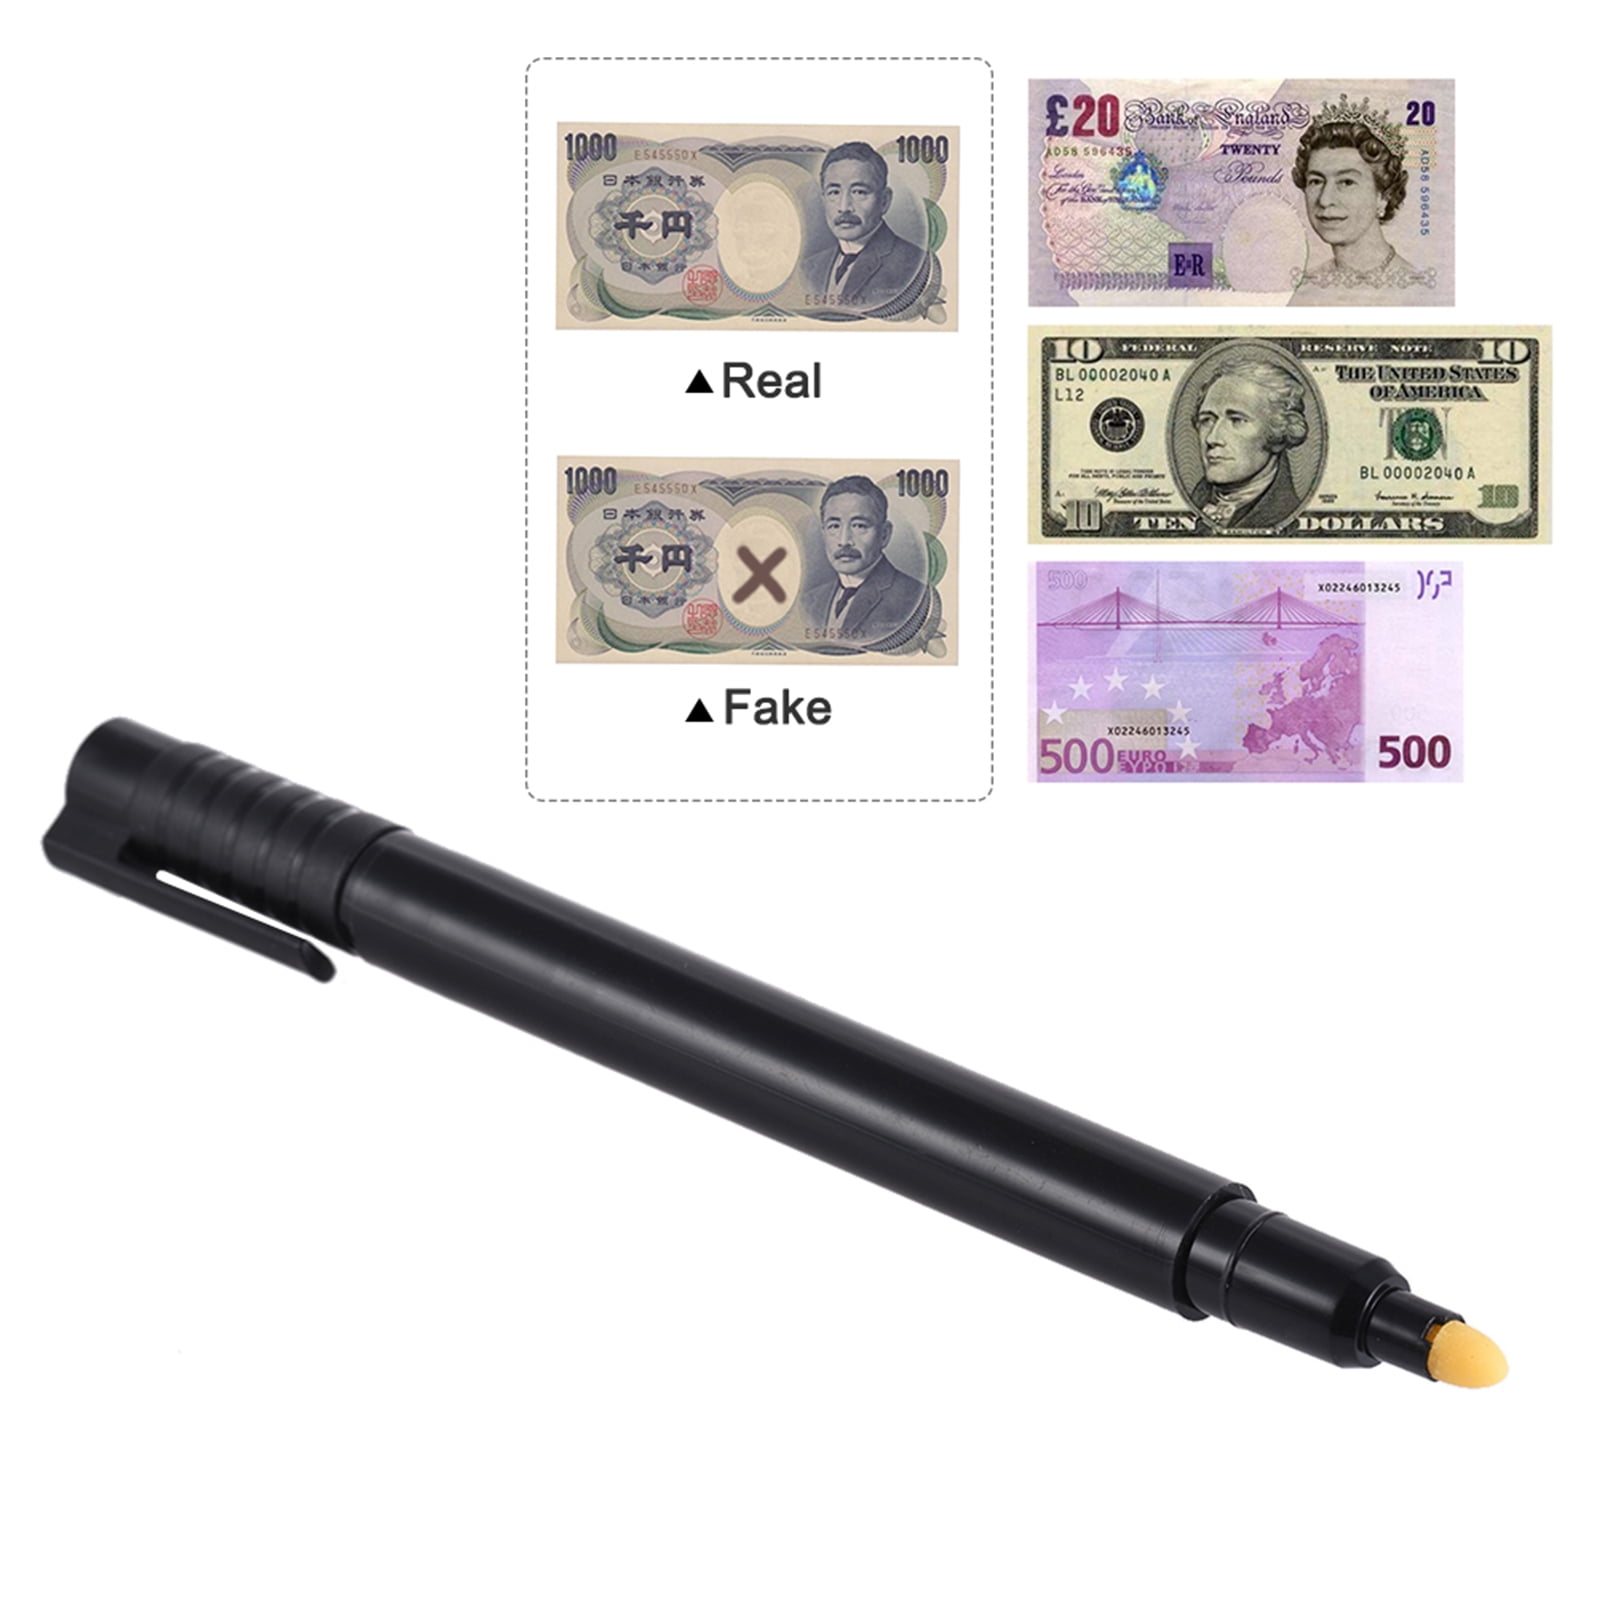 5x Counterfeit pen marker money checker tester UV fake note detector Free P&P 